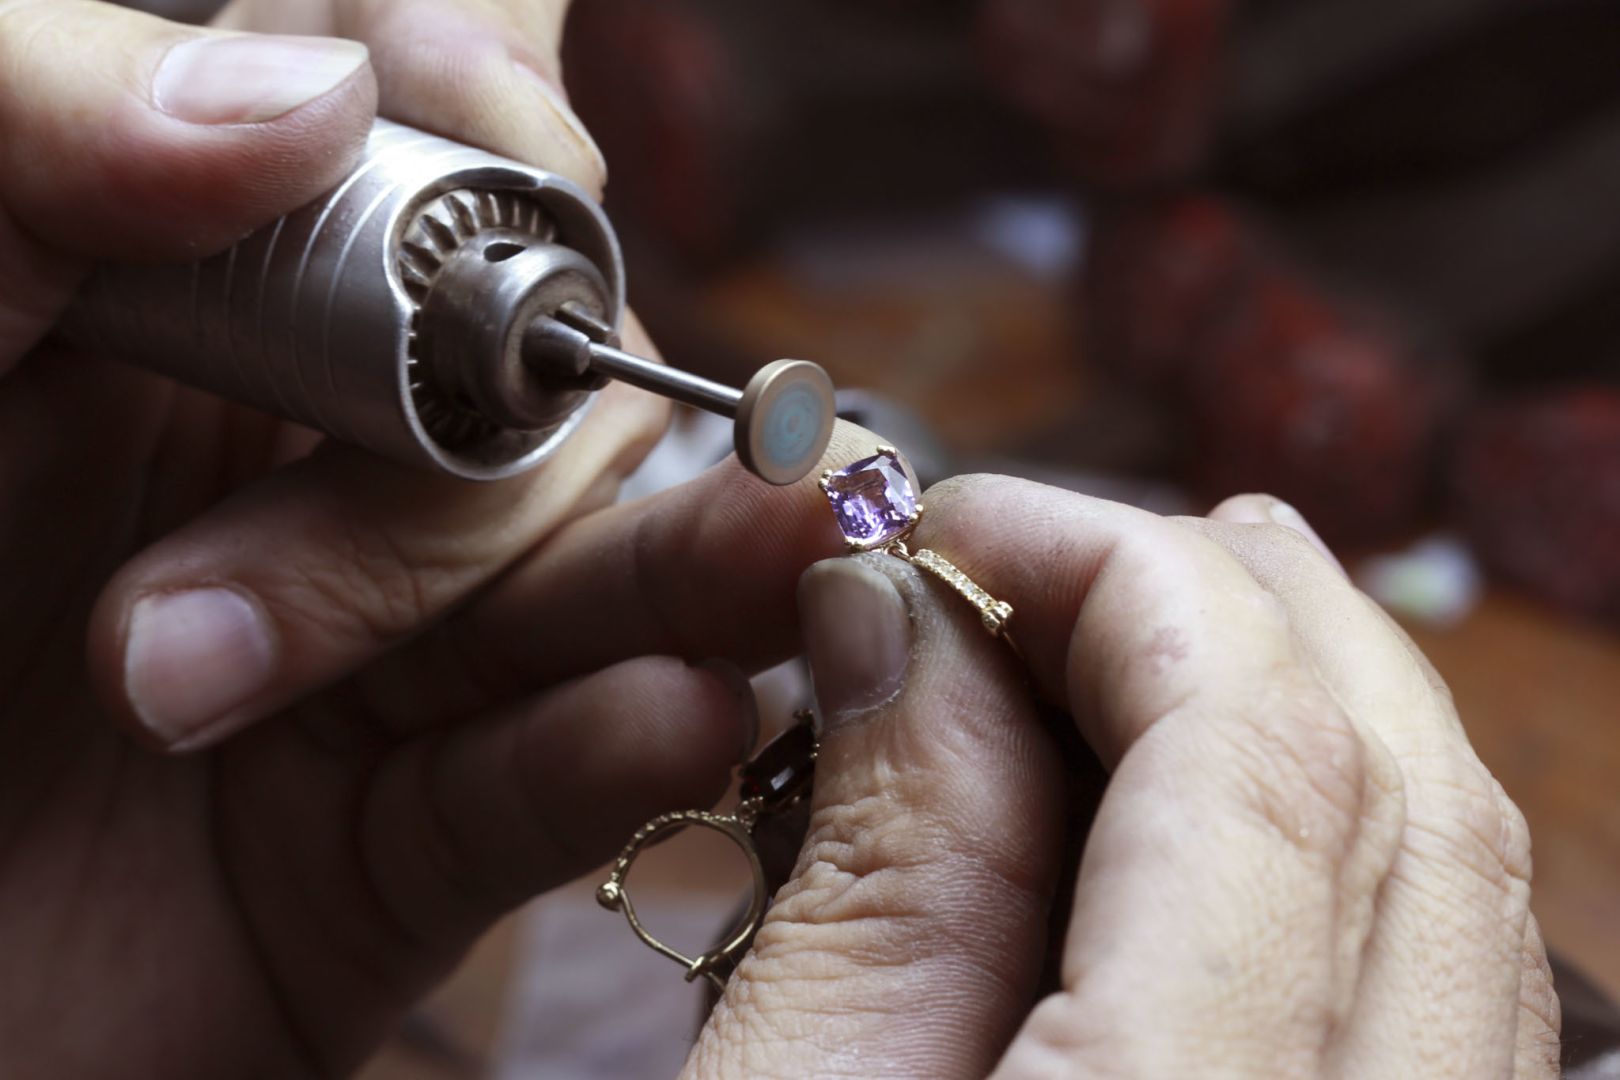 Azerbaijan extends tax breaks for jewelry production machines